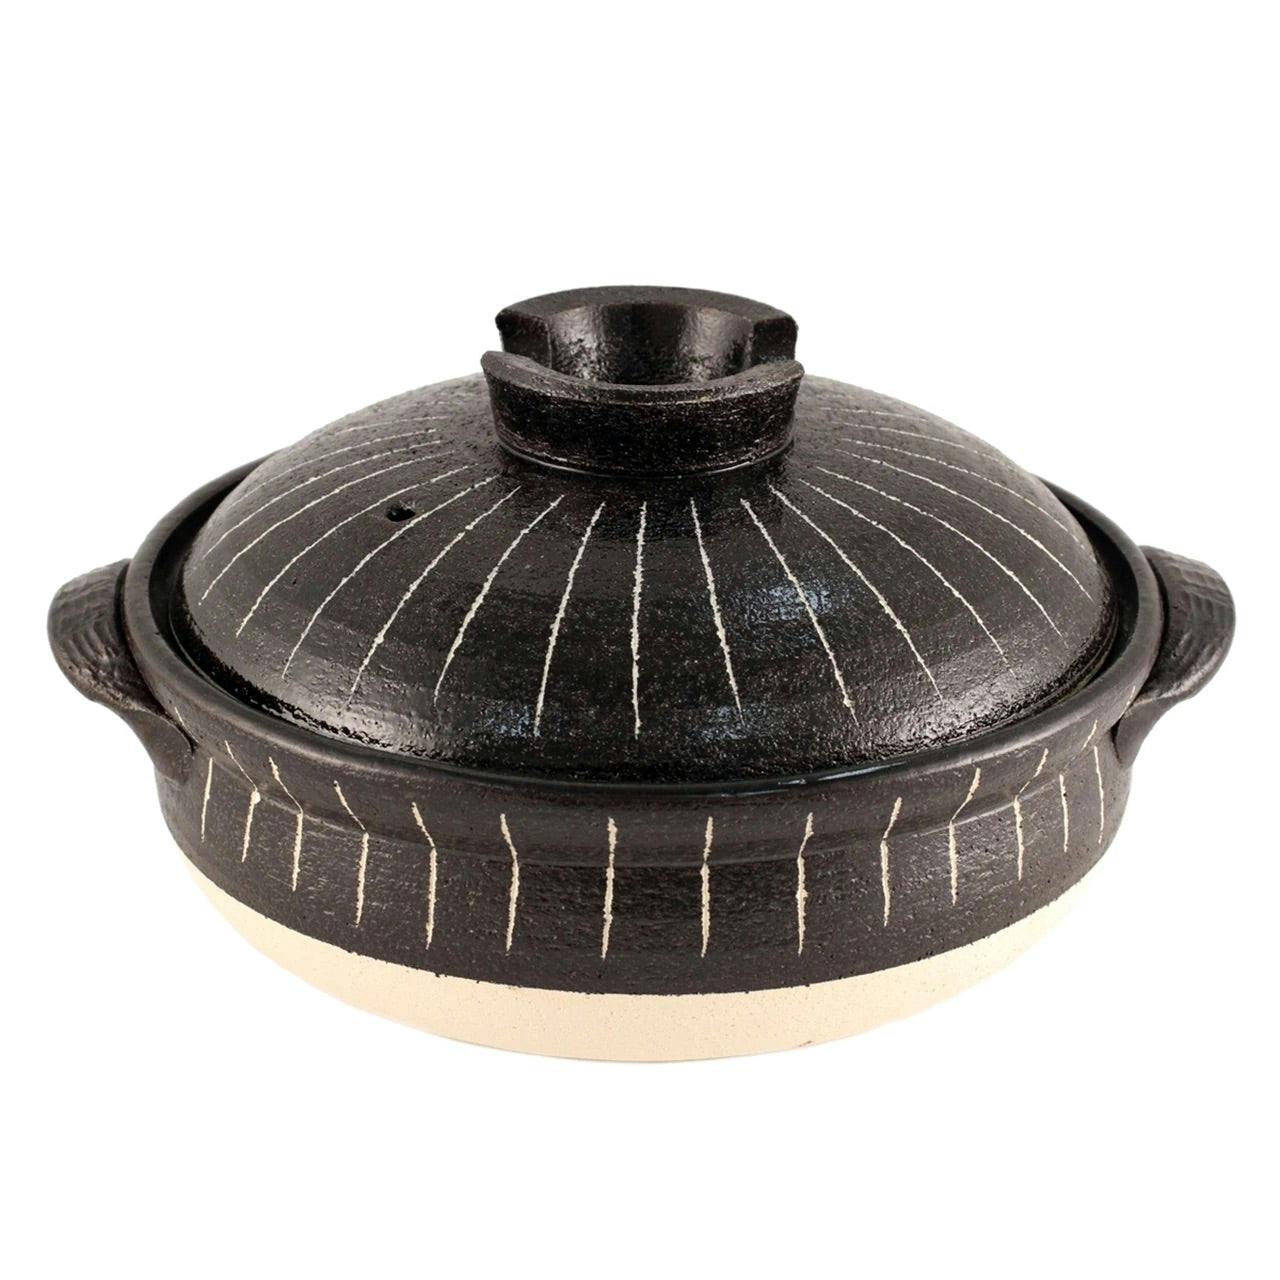 日本手工土锅 Striped Donabe Earthenware Pot 77 fl oz / 8.5" dia【日本进口】